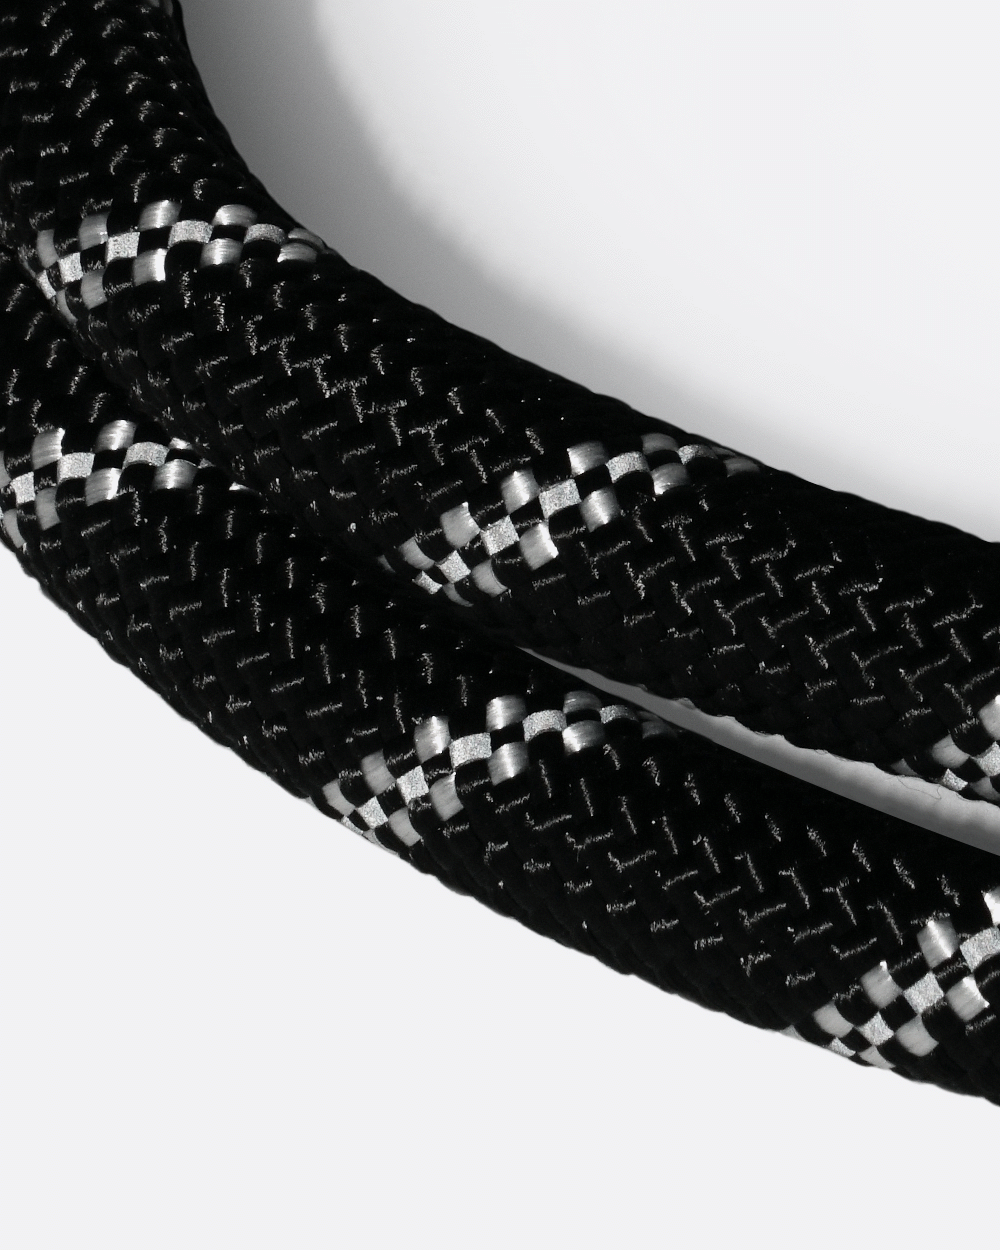 Martingale Double Rope Slip Collar - Classic Black